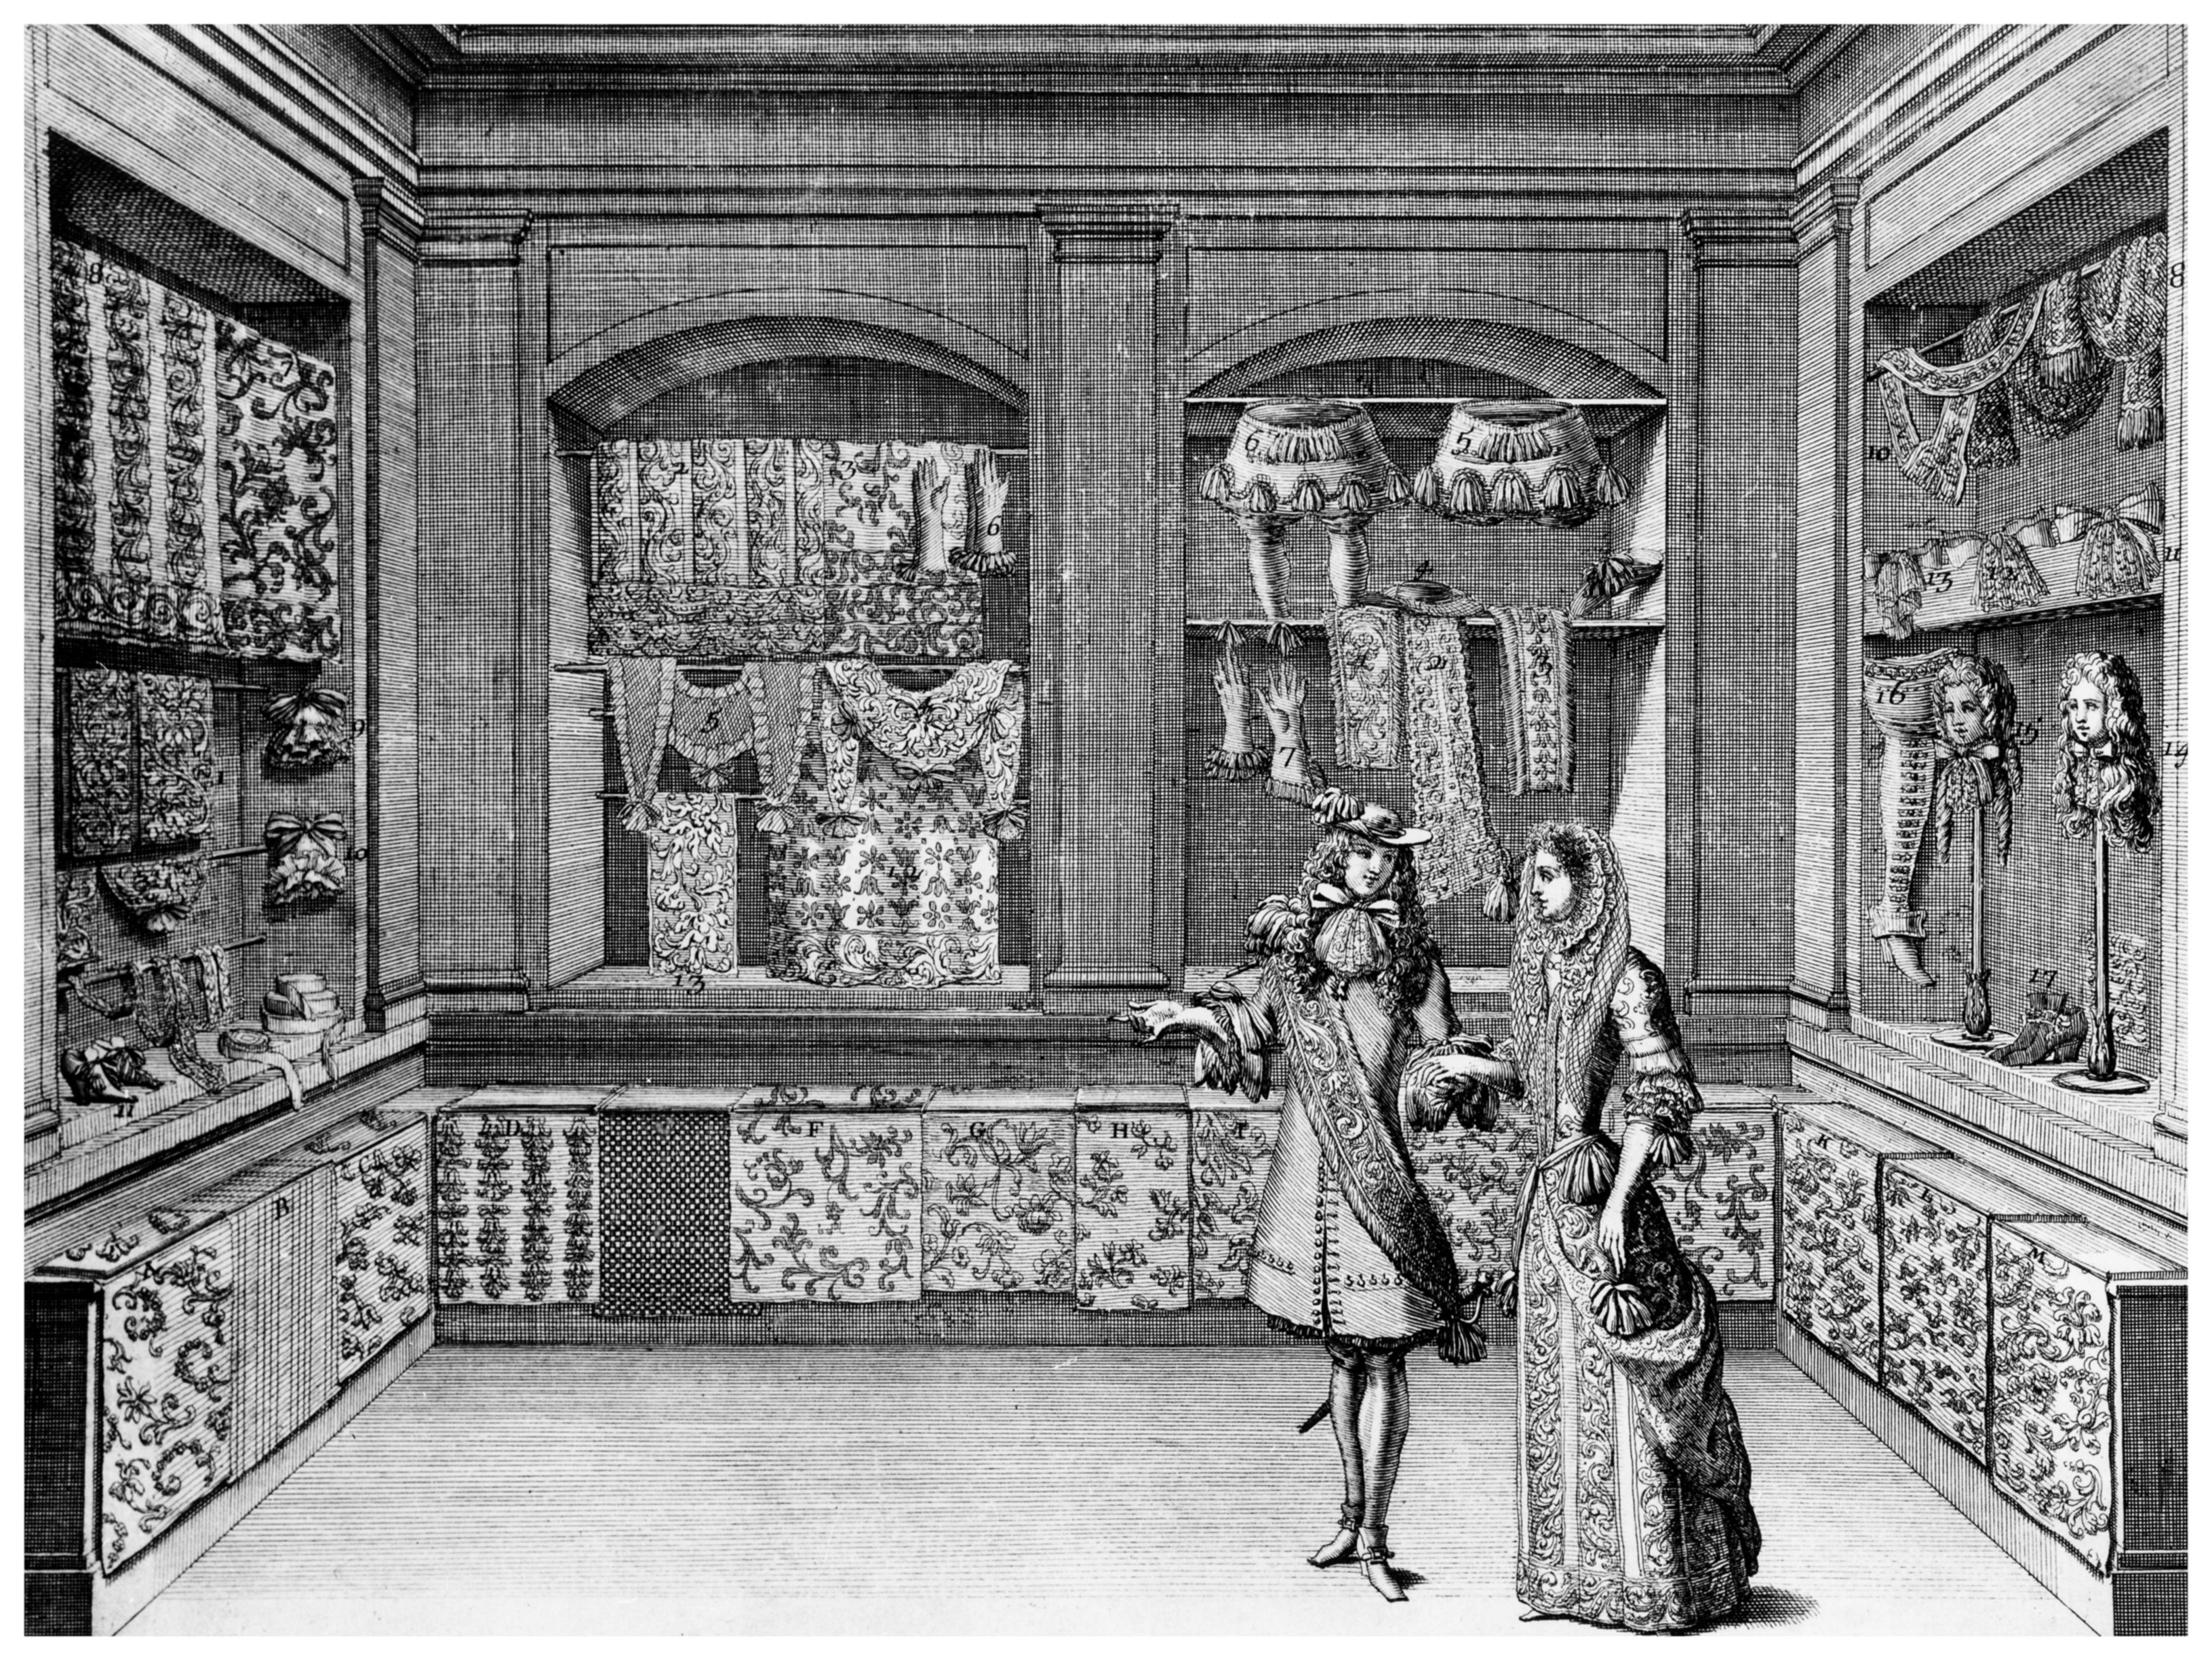 Kostümzeichnung für <i>Le feste di Amore e di Bacco</i> von Jean Bérain d. Ä, Ballett von Jean-Baptiste Lully, Uraufführung im Palais Royal am 15.11.1672, Bild-Nr.: 703007641, bpk/DeA Picture Library.